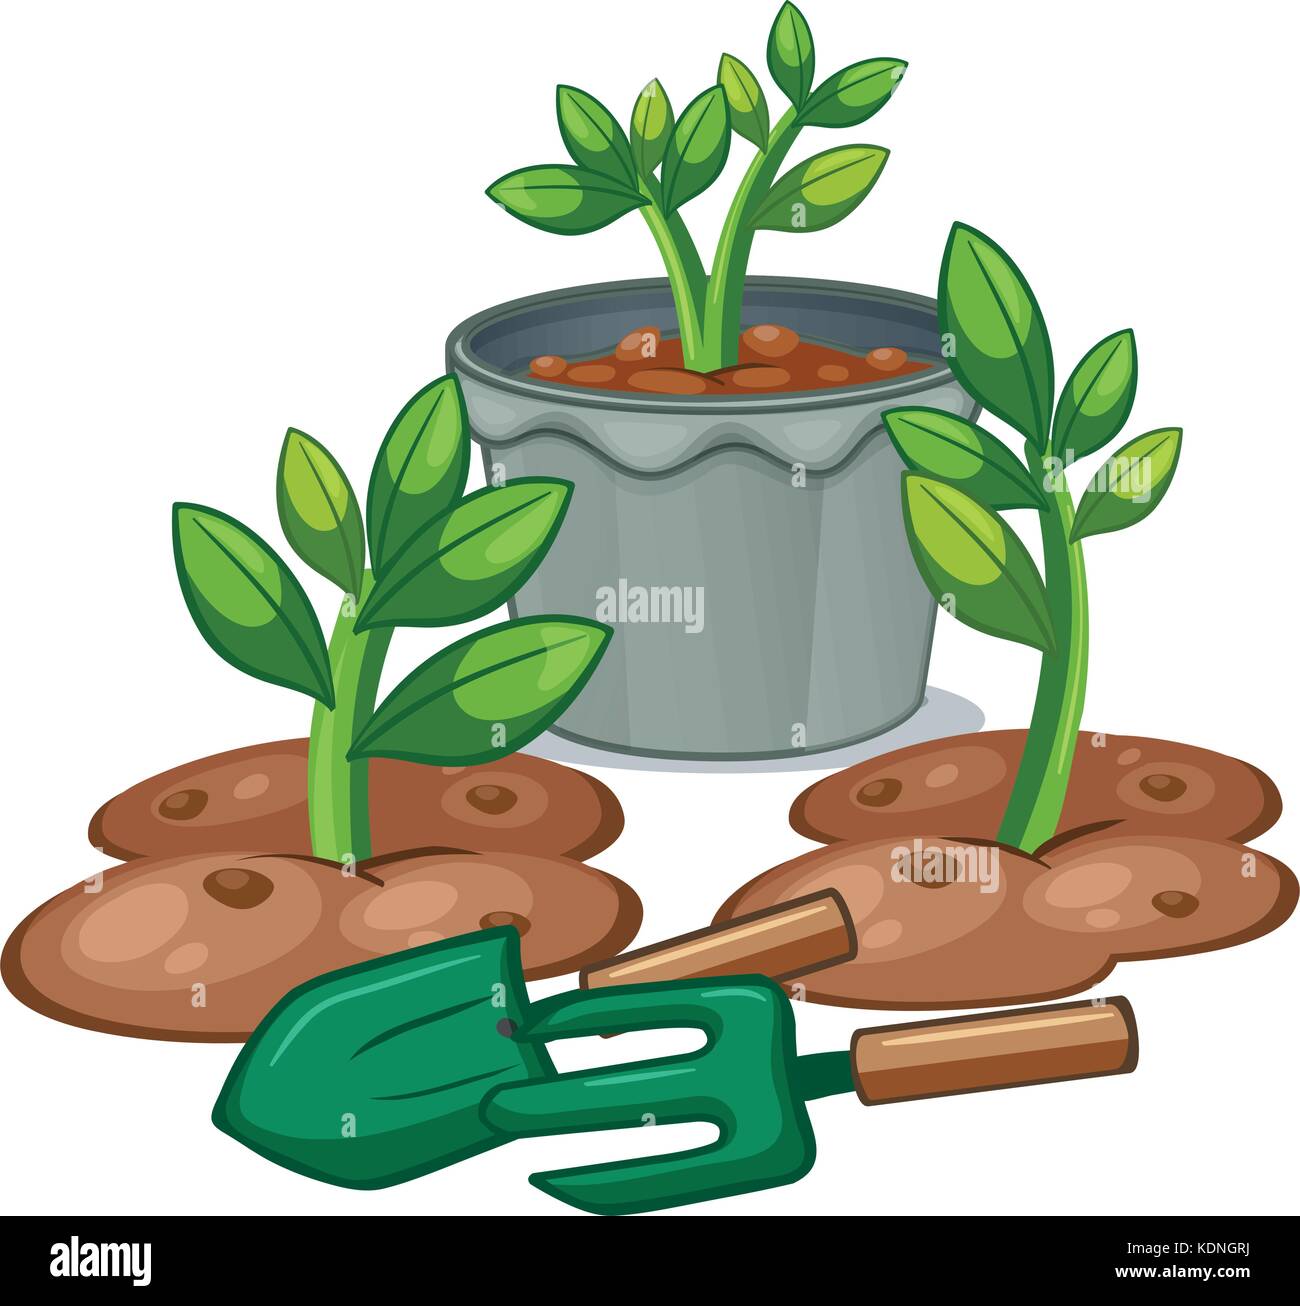 Plants and gardening equipments illustration Stock Vector